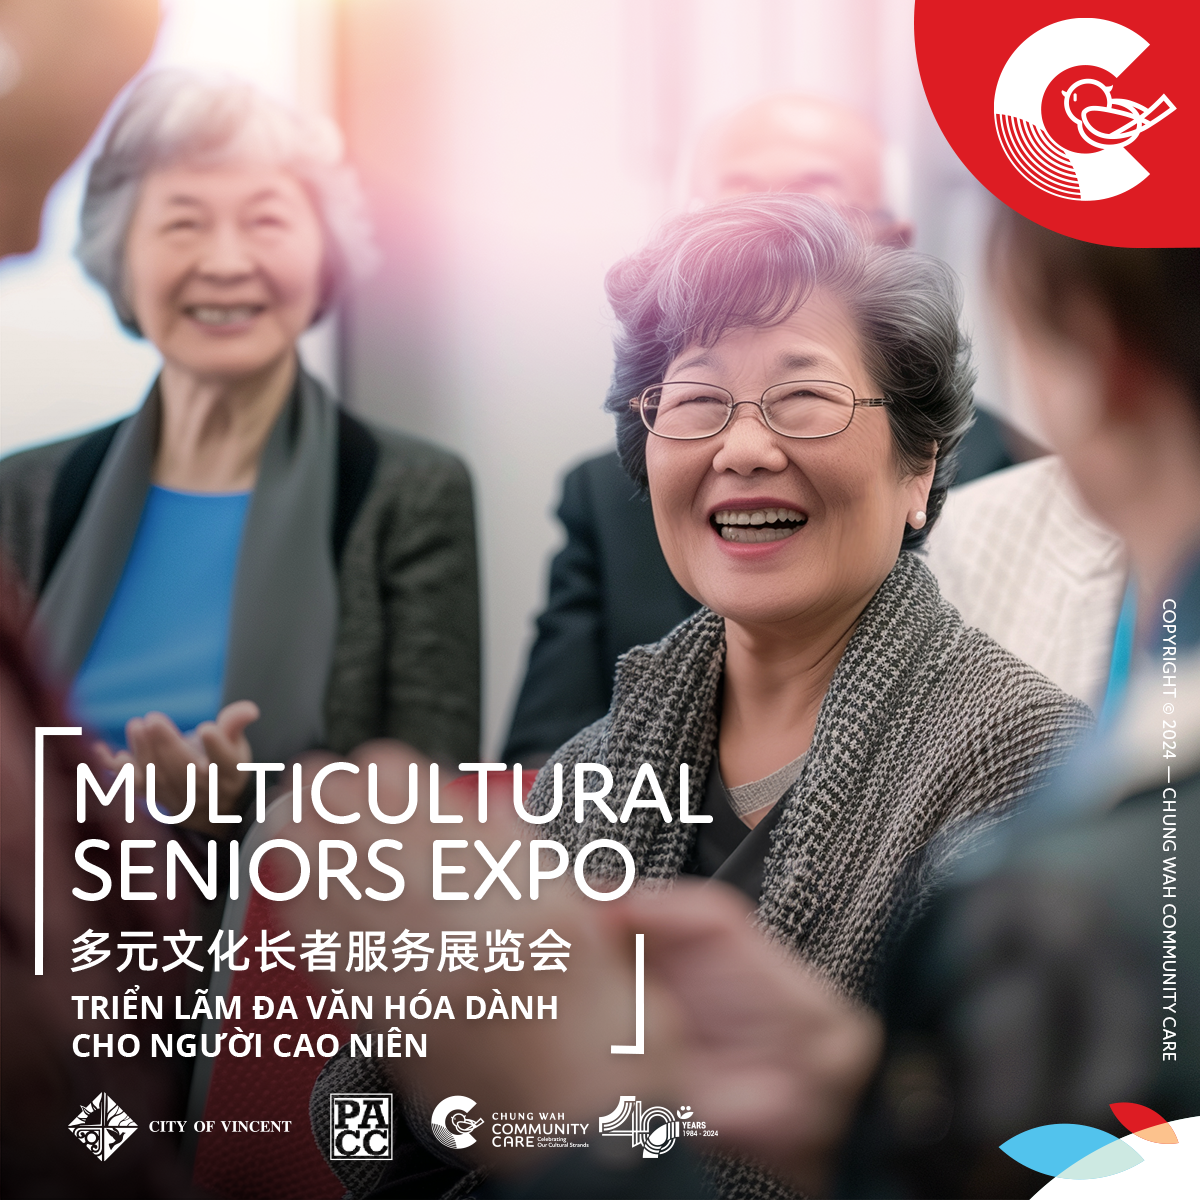 Multicultural Seniors Expo